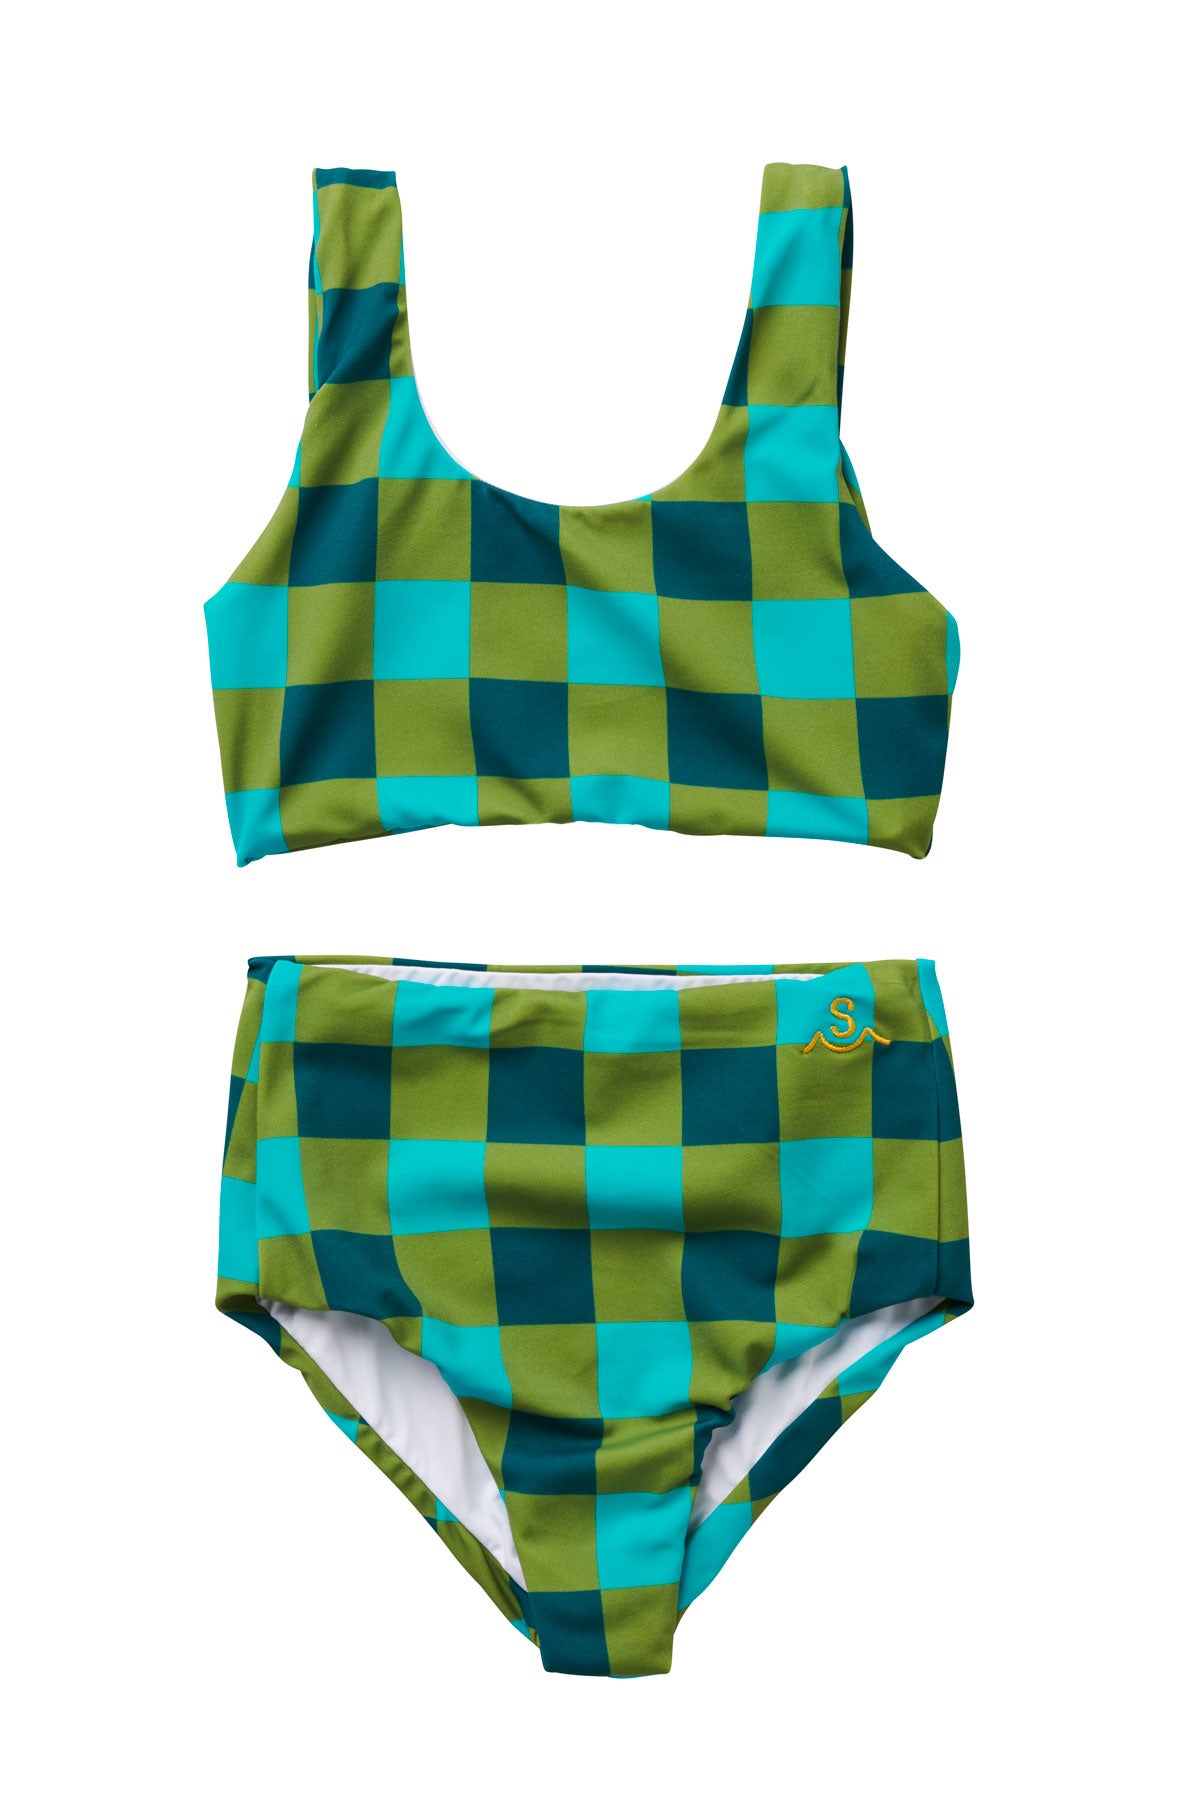 Retro Bathing Suits Women Brazilian Flat-Chested Bikini Swimsuit